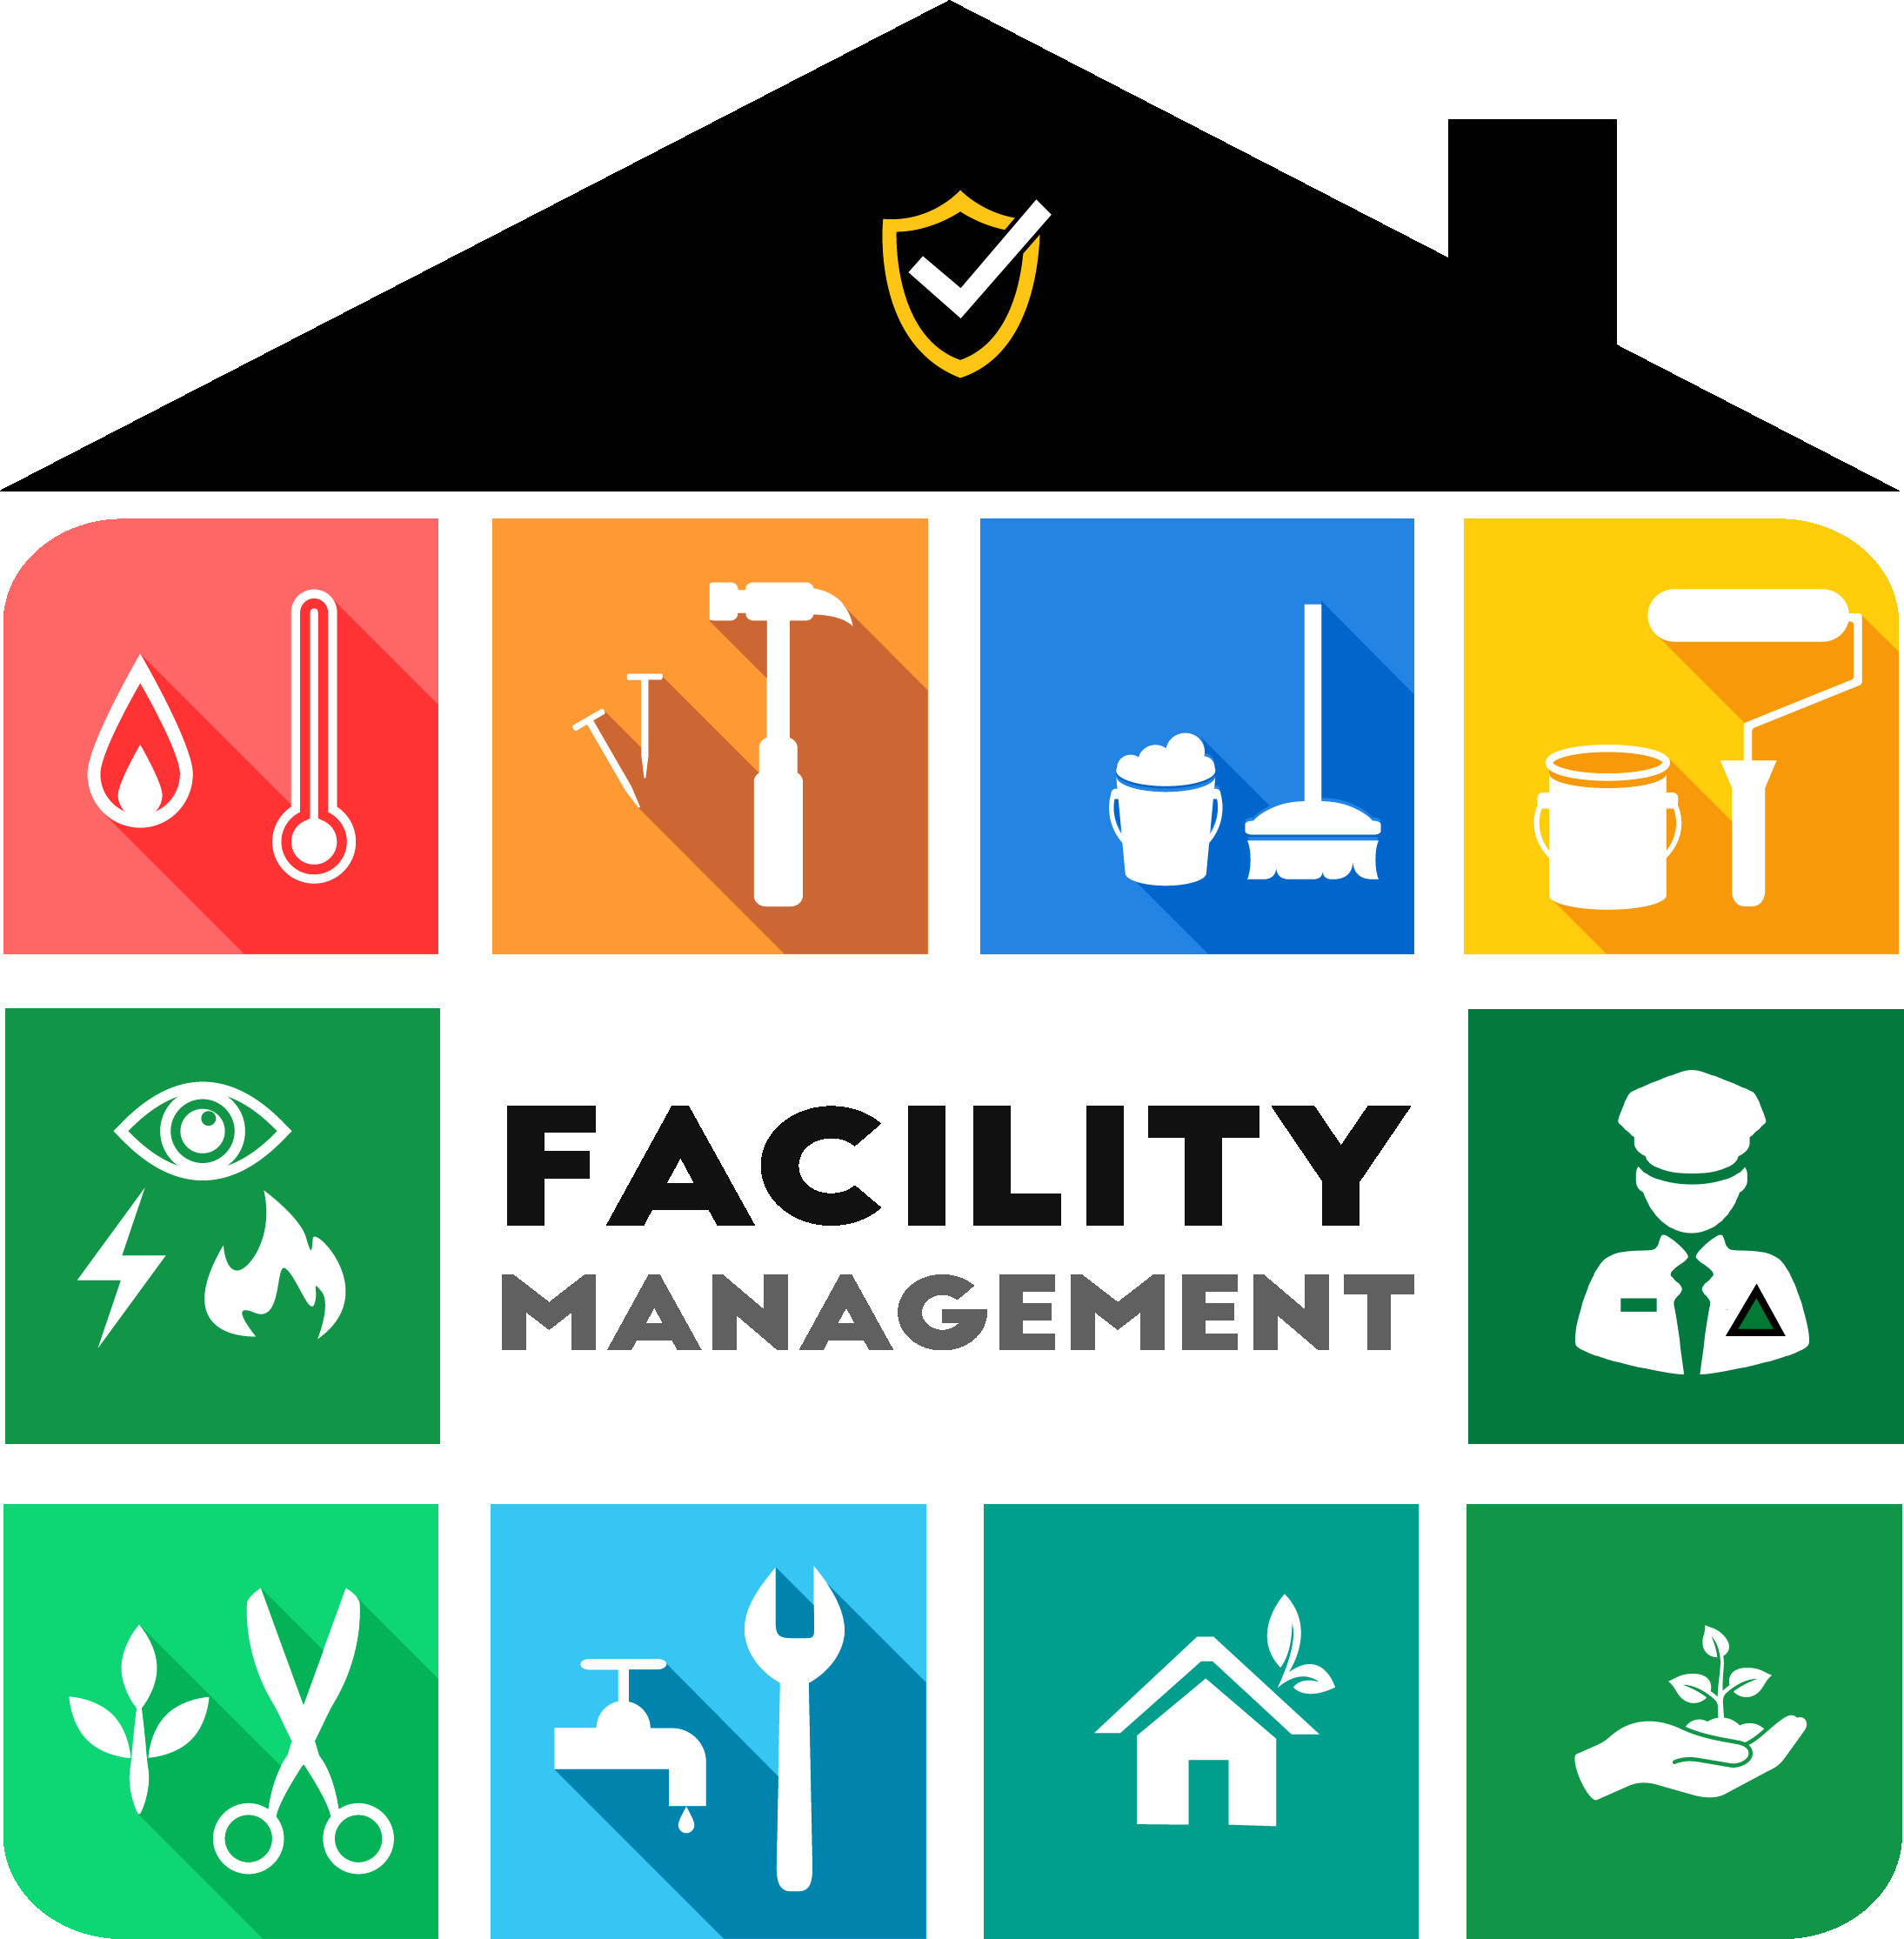 Facility Management - Facilities management - Управление инфраструктурой организации - Учет активов предприятия